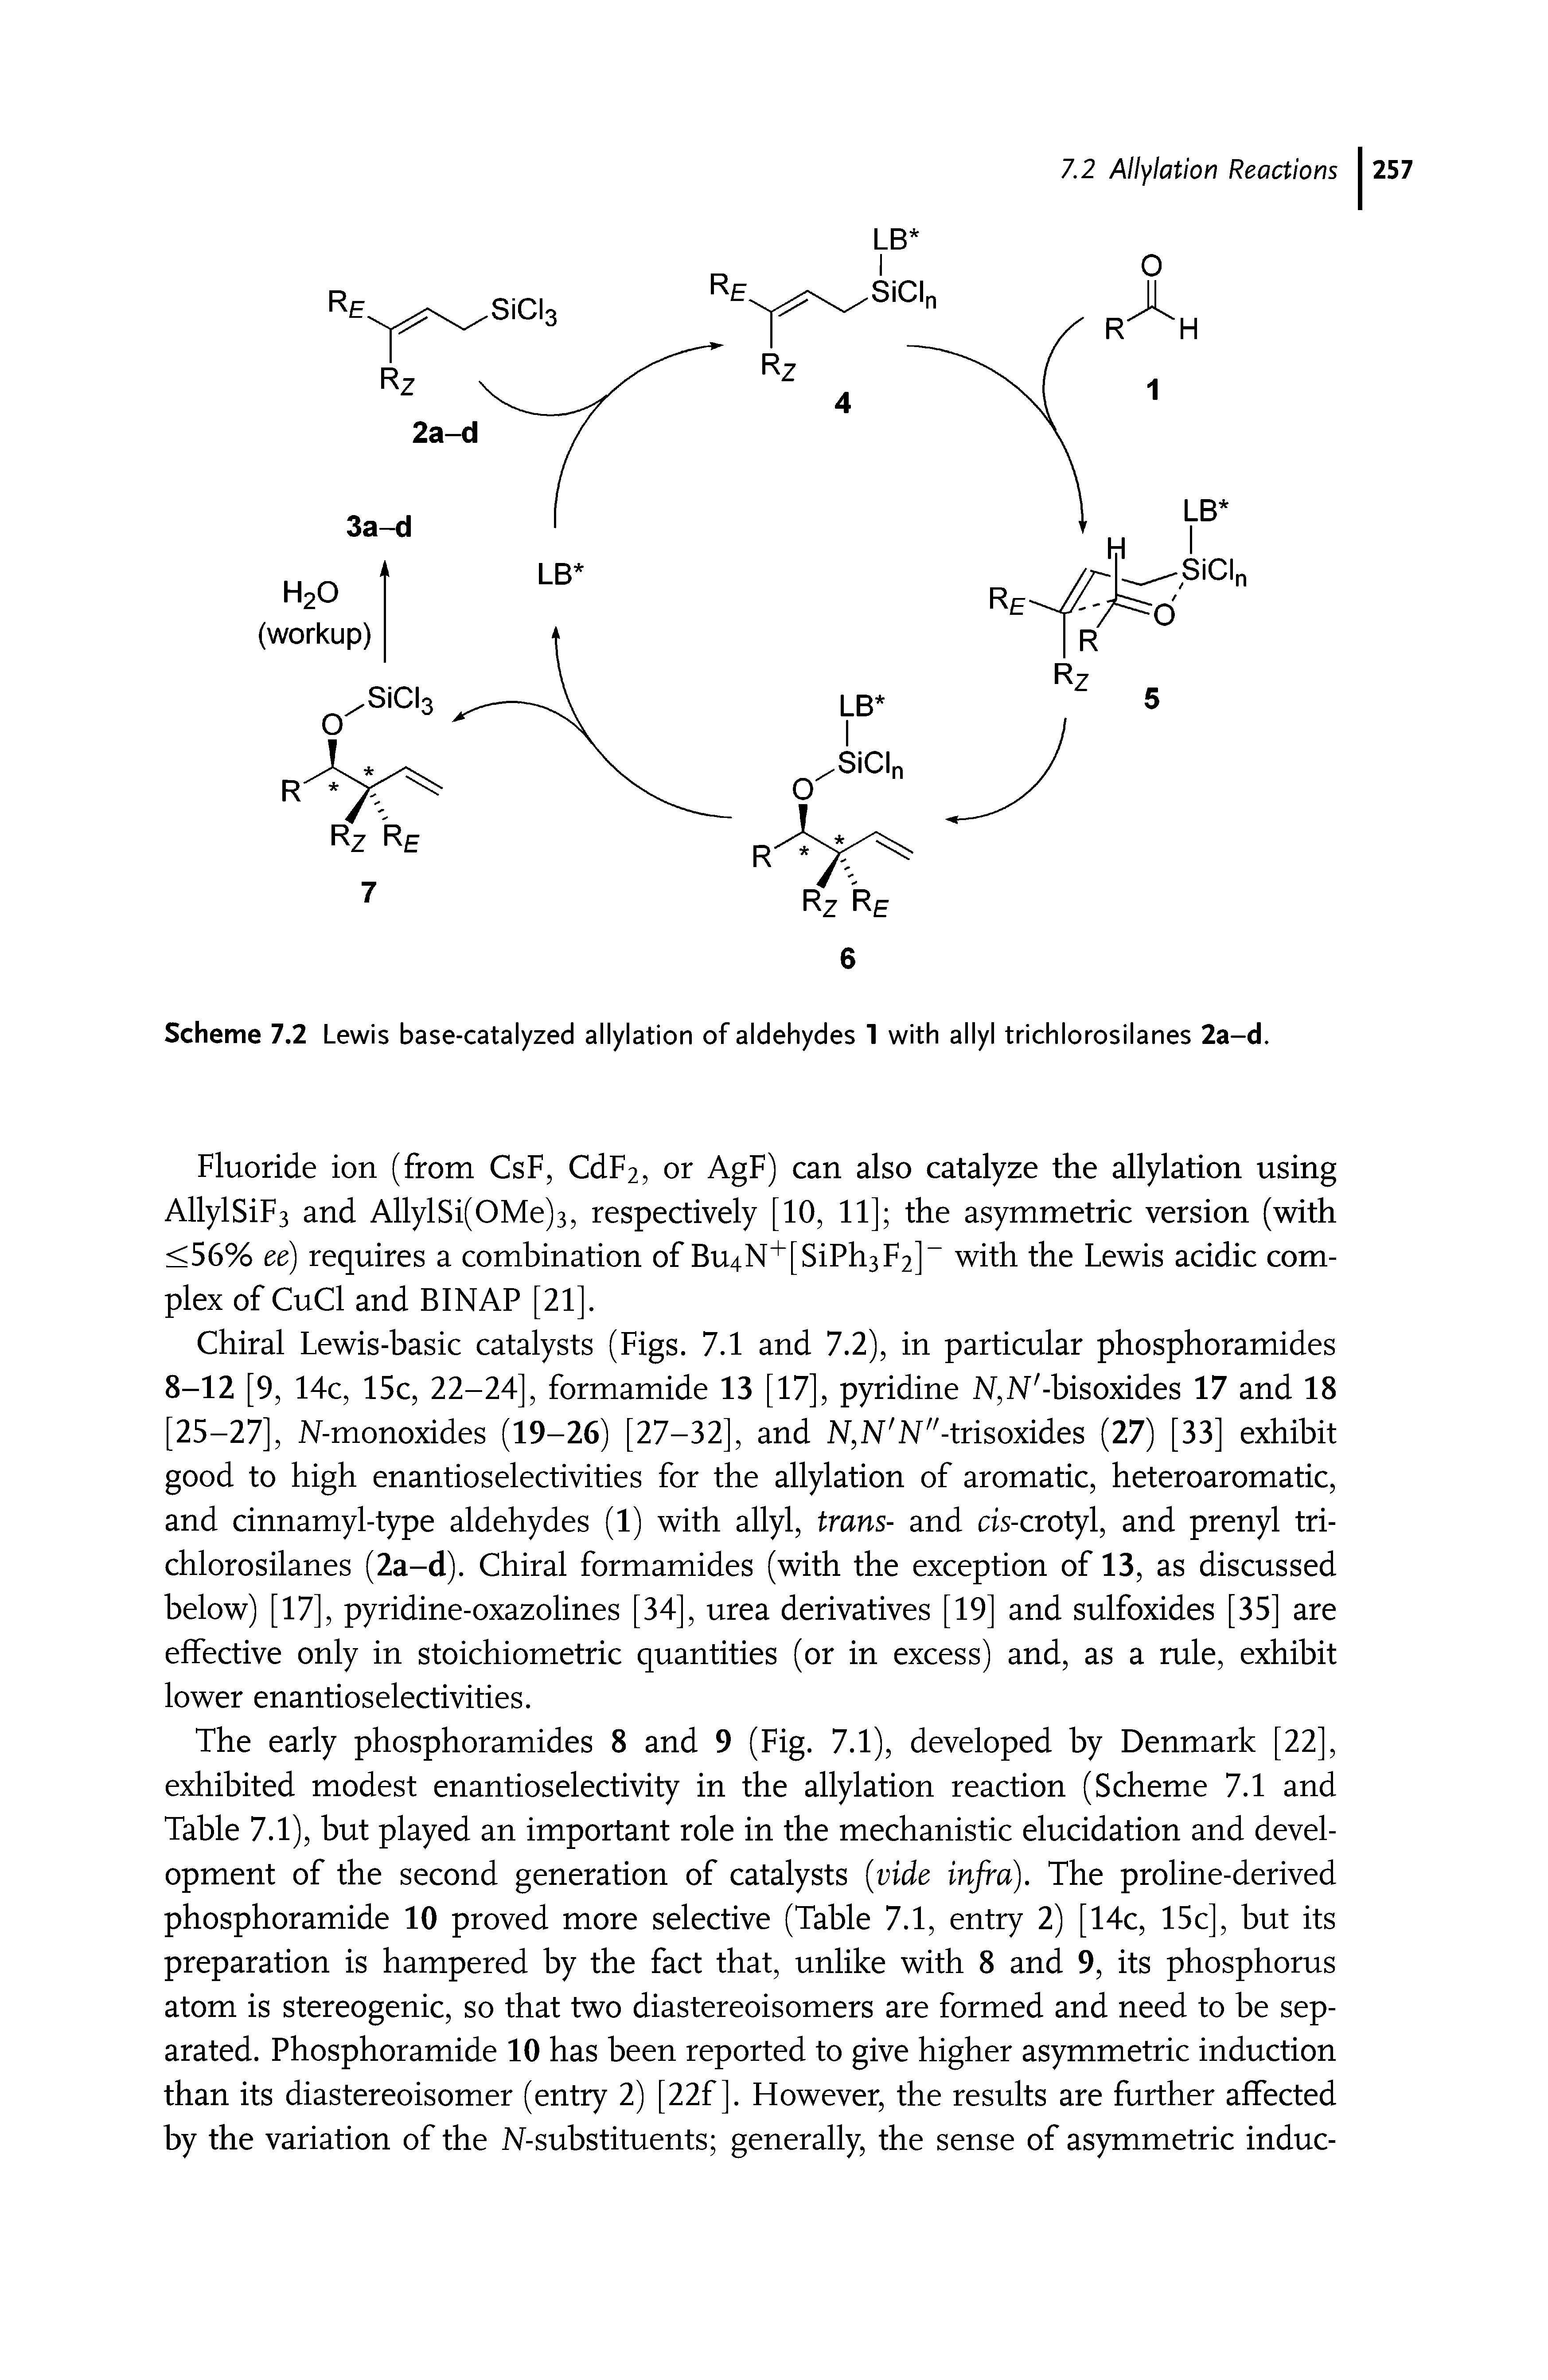 Scheme 7.2 Lewis base-catalyzed allylation of aldehydes 1 with allyl trichlorosilanes 2a-d.